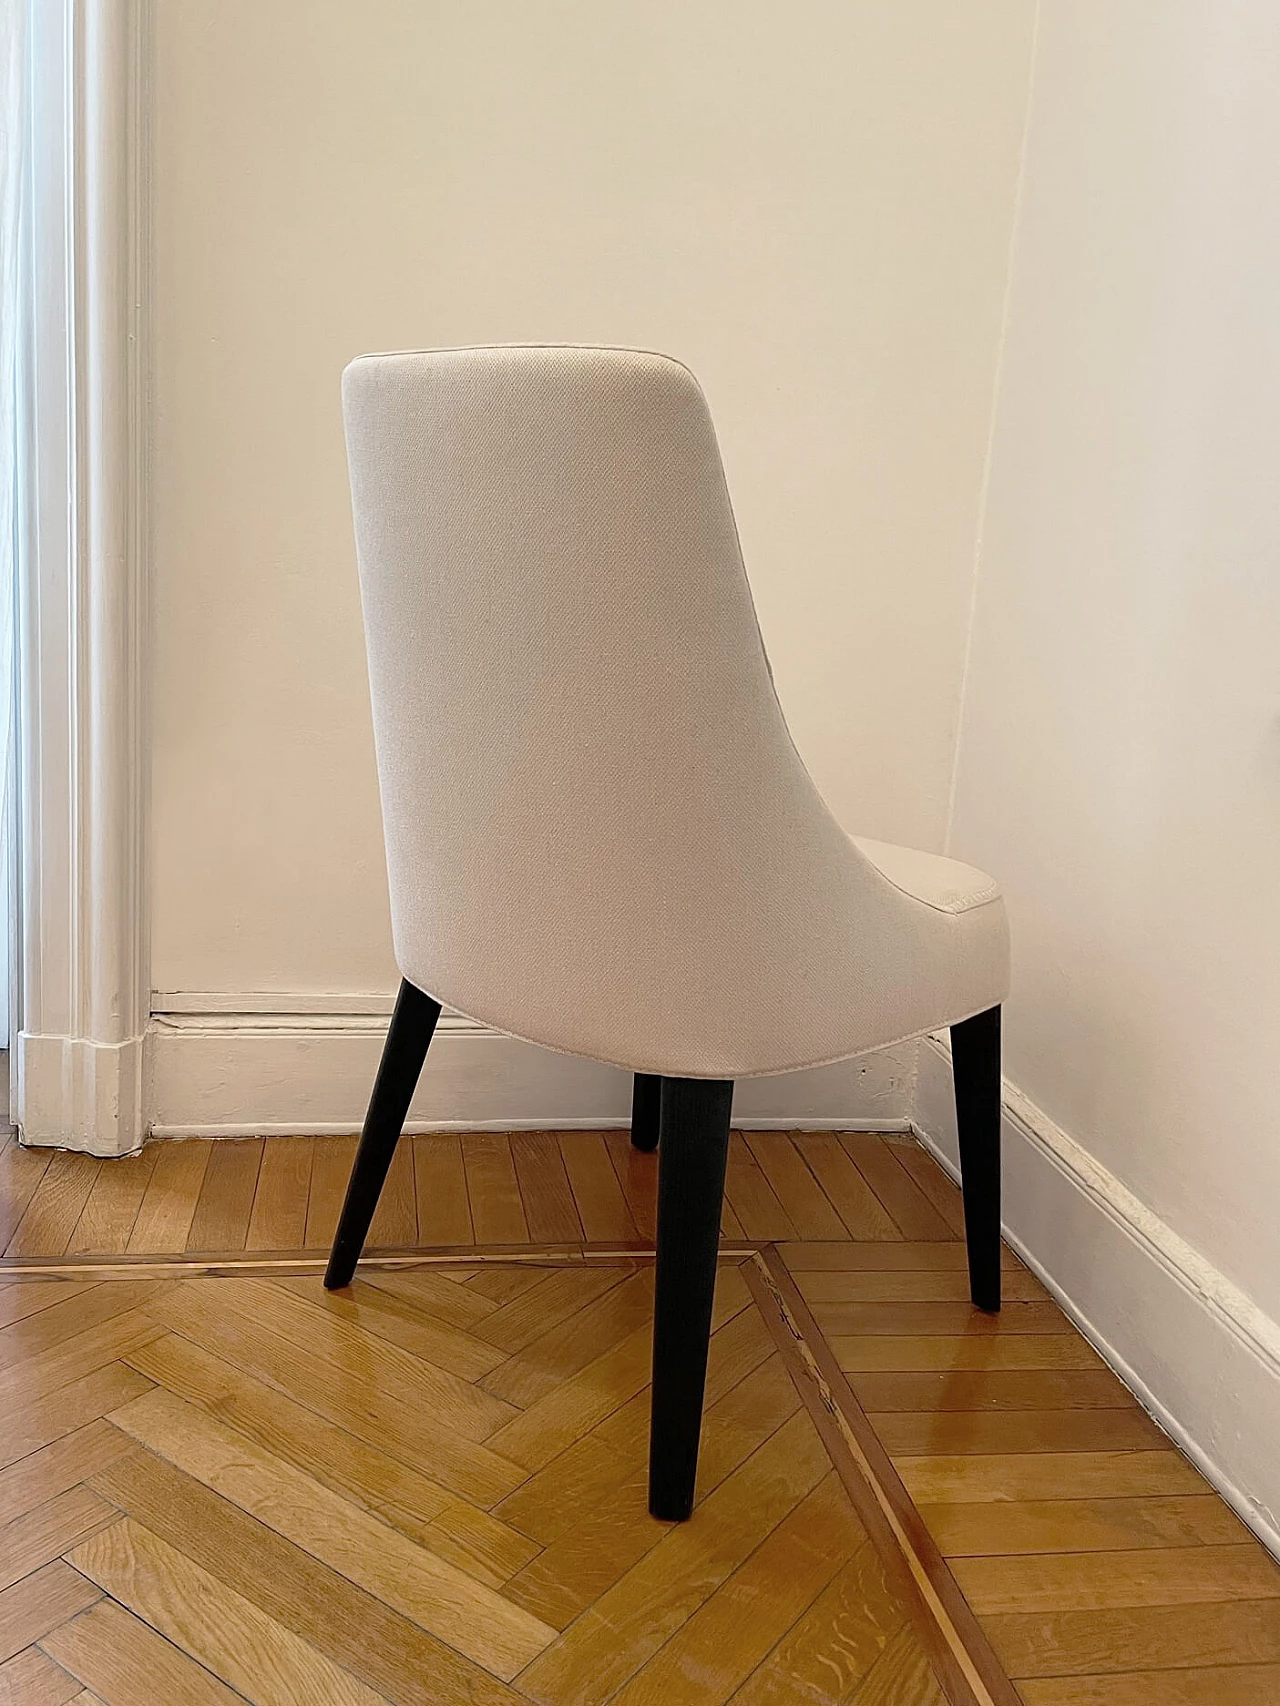 4 Febo Apta chairs by Antonio Citterio for Maxalto, B&B Italia, 2012 1367207